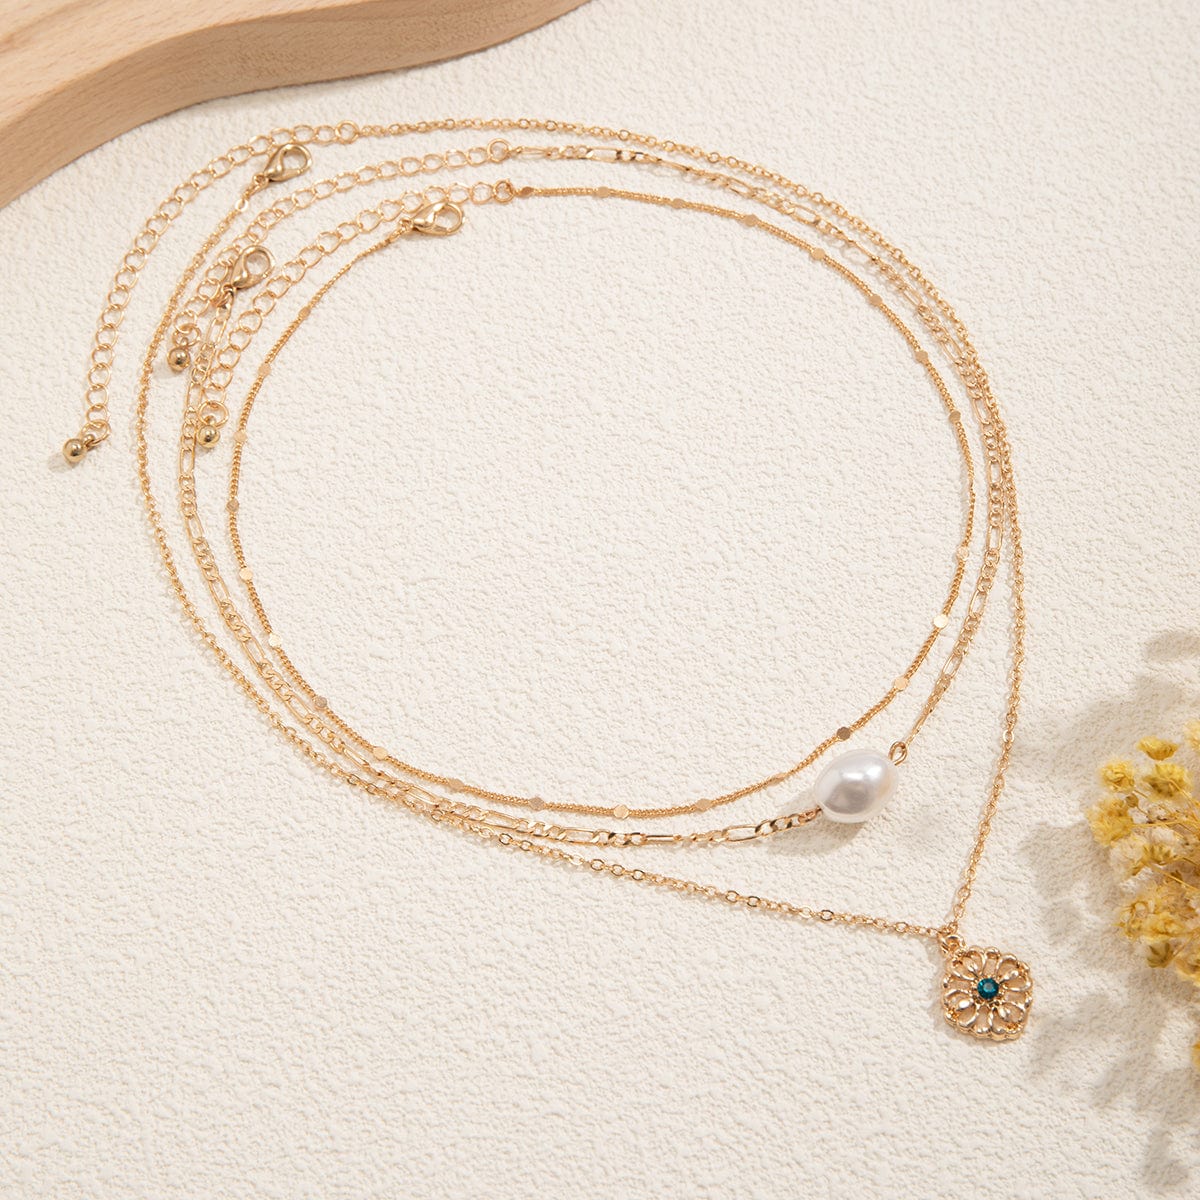 Chic Layered Flower Pendant Pearl Chain Necklace Set - ArtGalleryZen